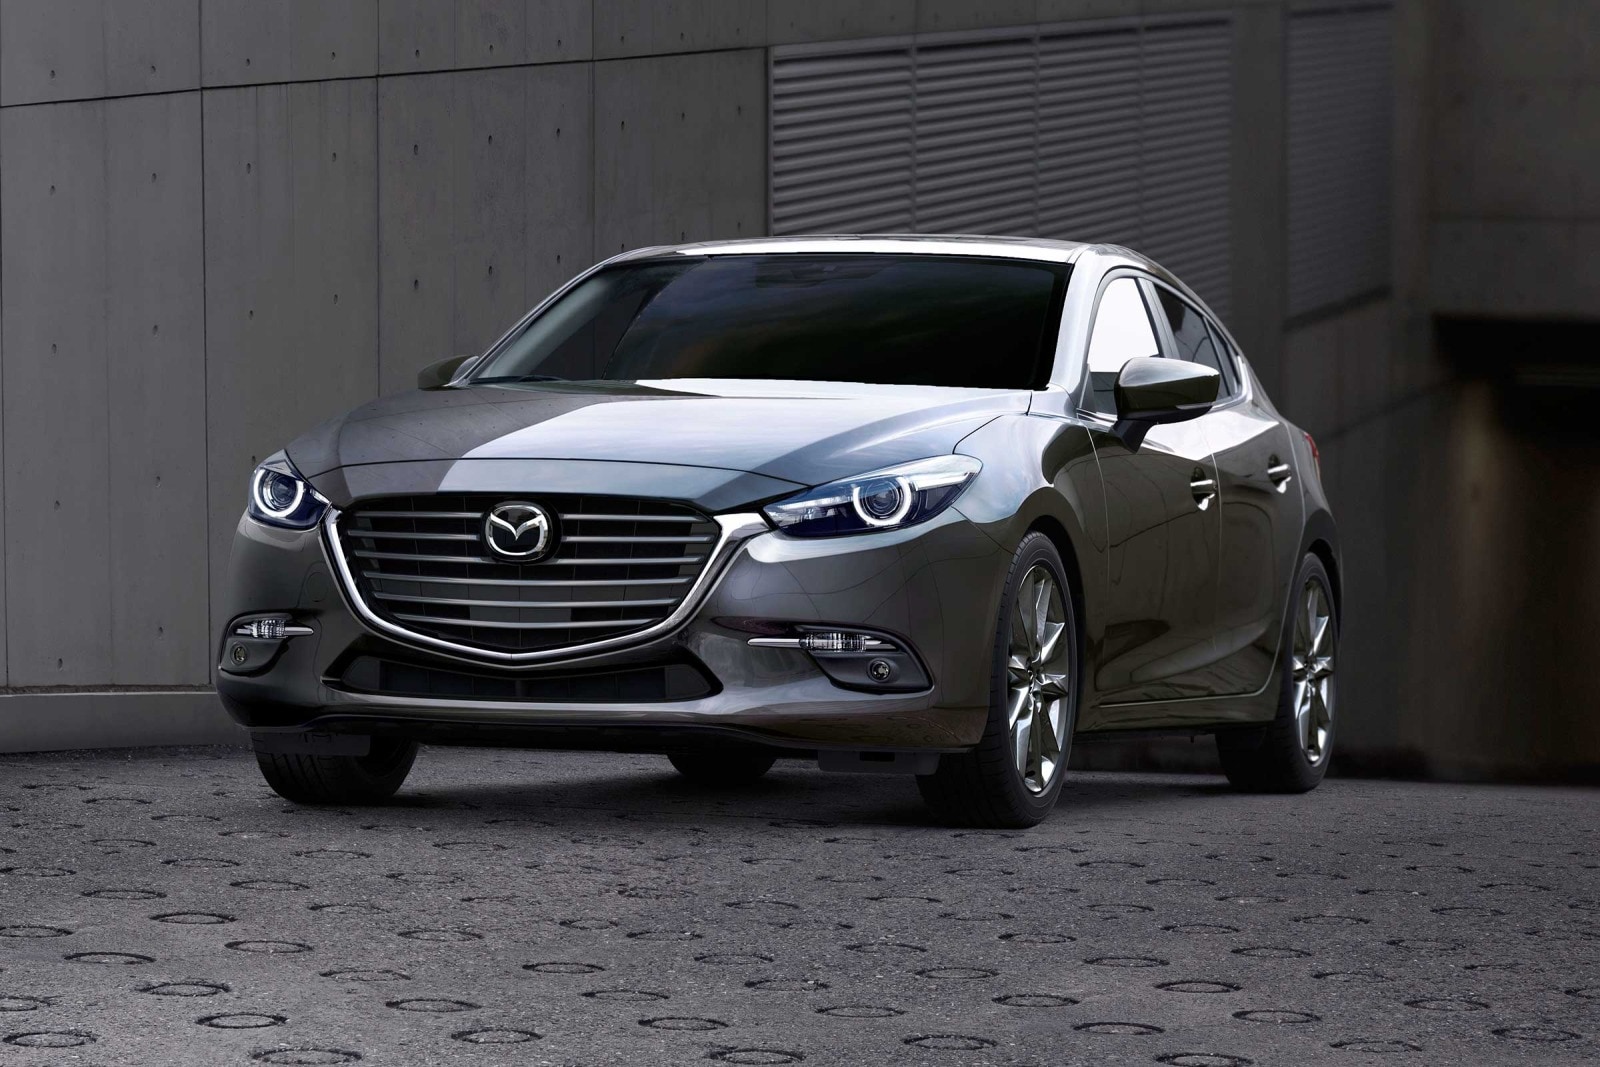 2017 Mazda 3 Review & Ratings | Edmunds